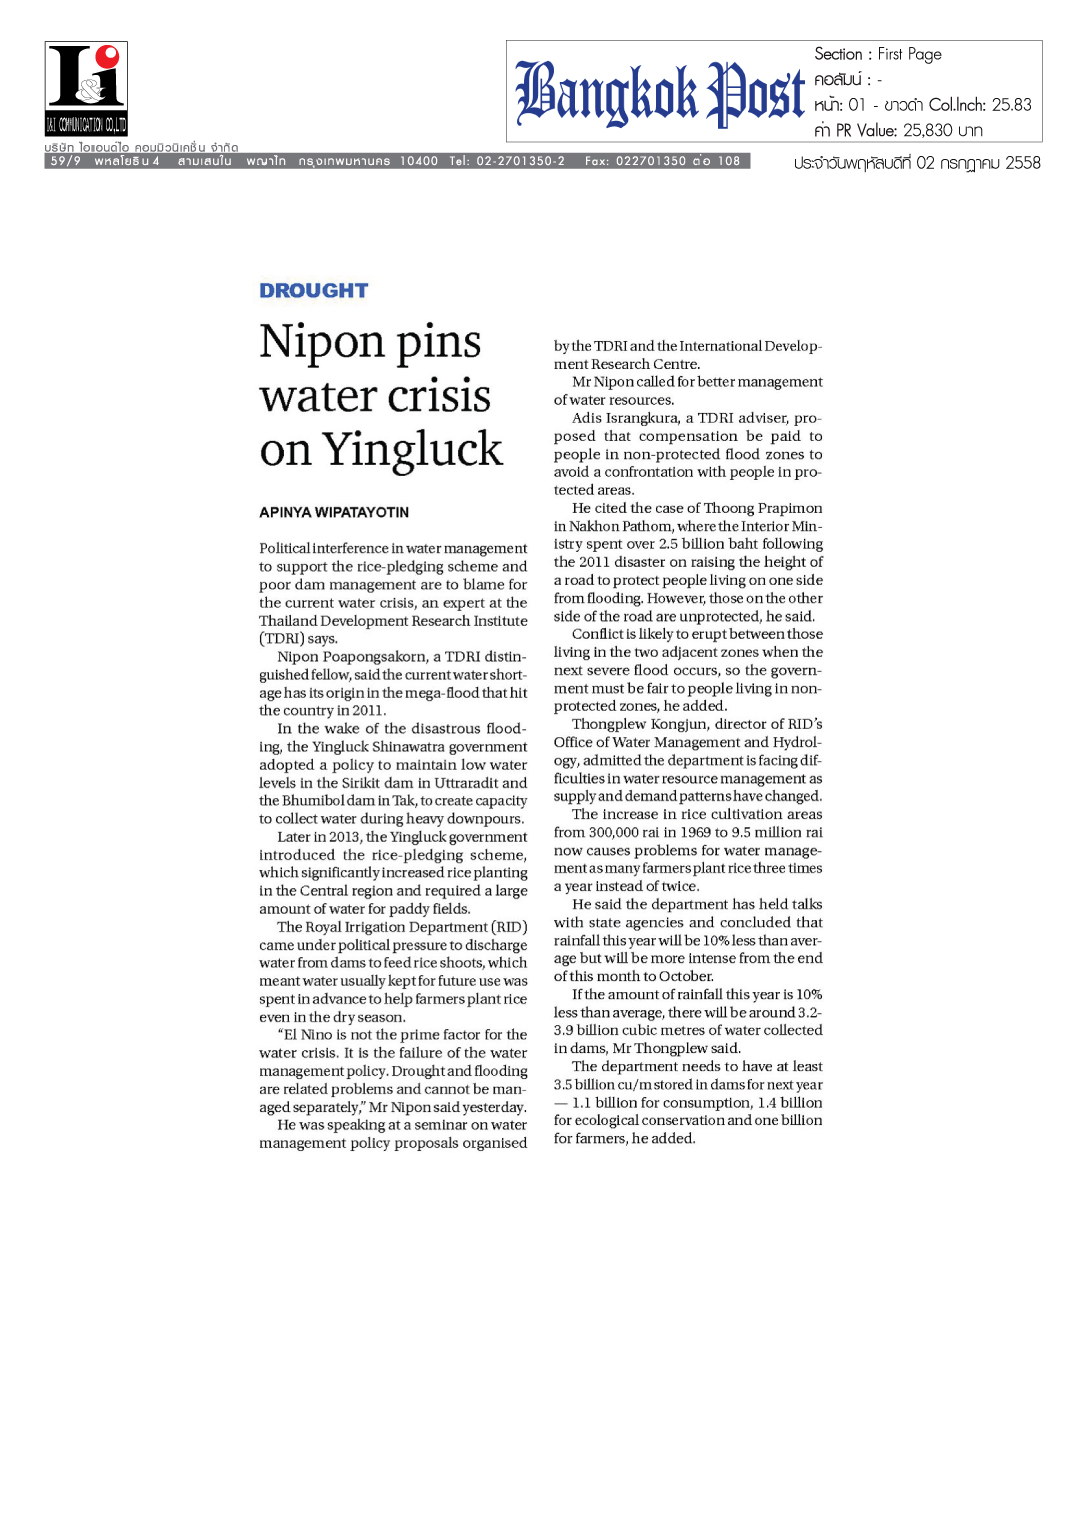 Bangkok Post 02-07-58  Nipon pins water crisis on Yingluck